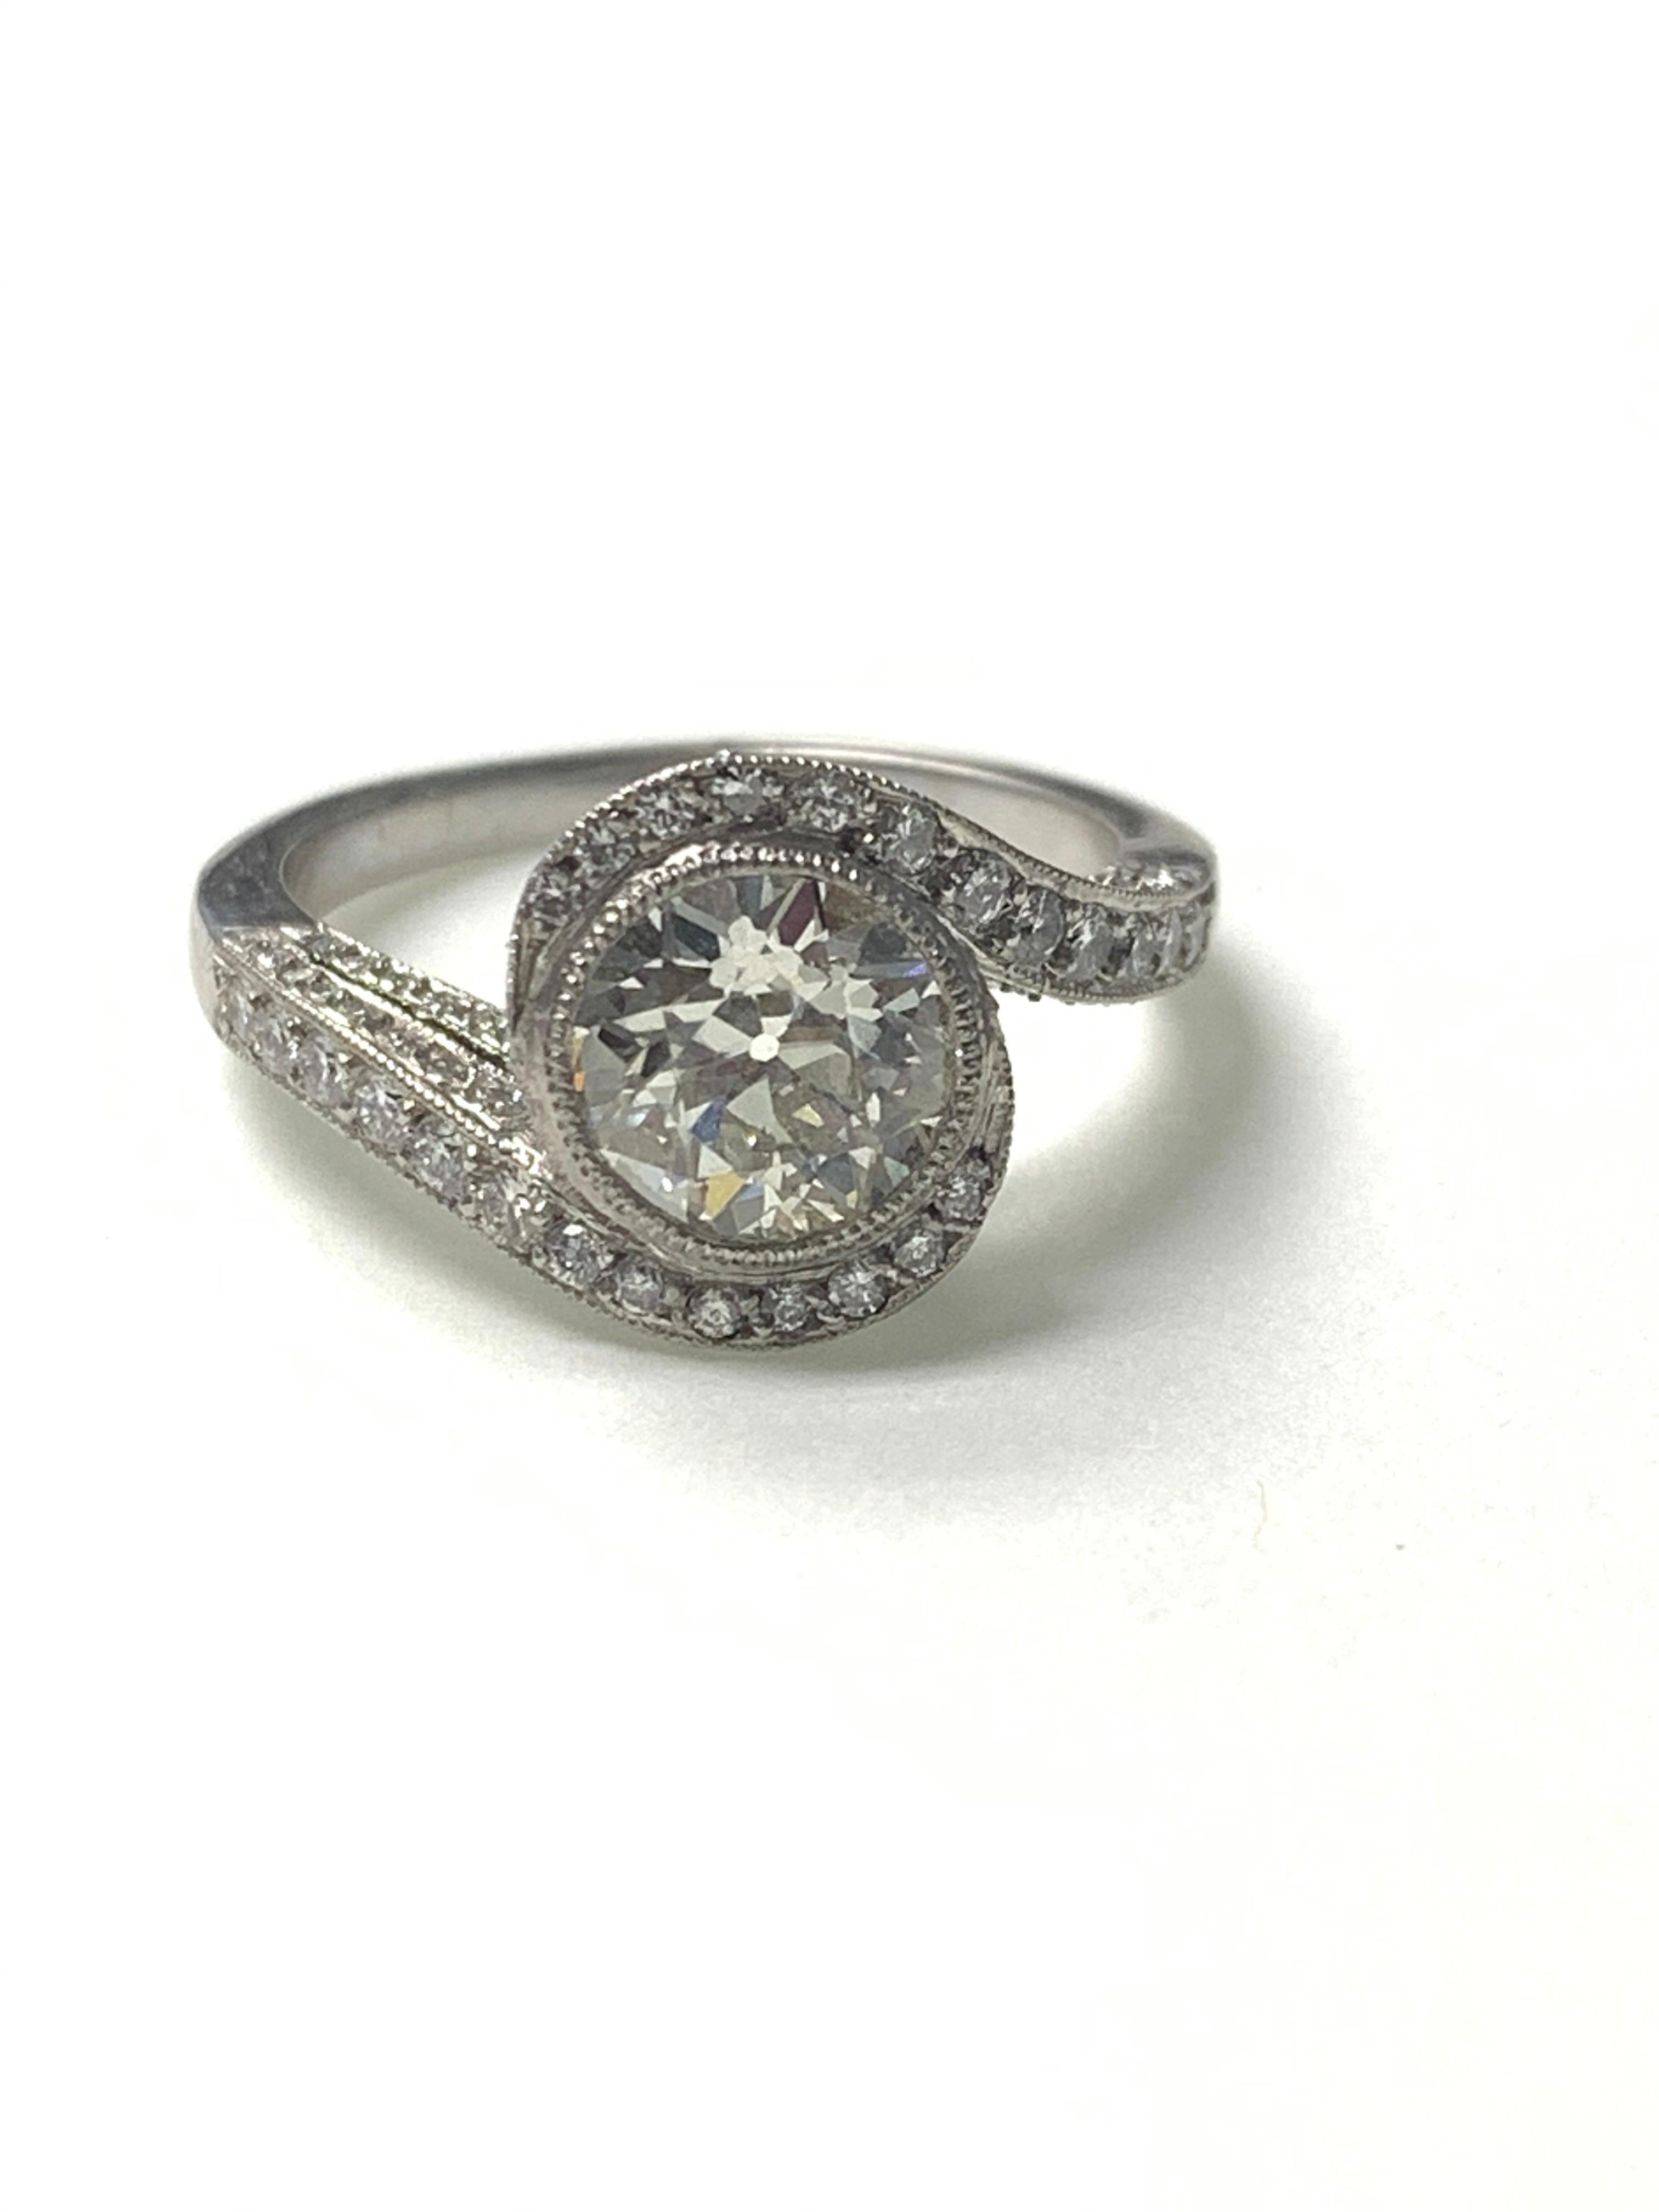 Old European Cut White European Cut Diamond Engagement Ring in Platinum For Sale